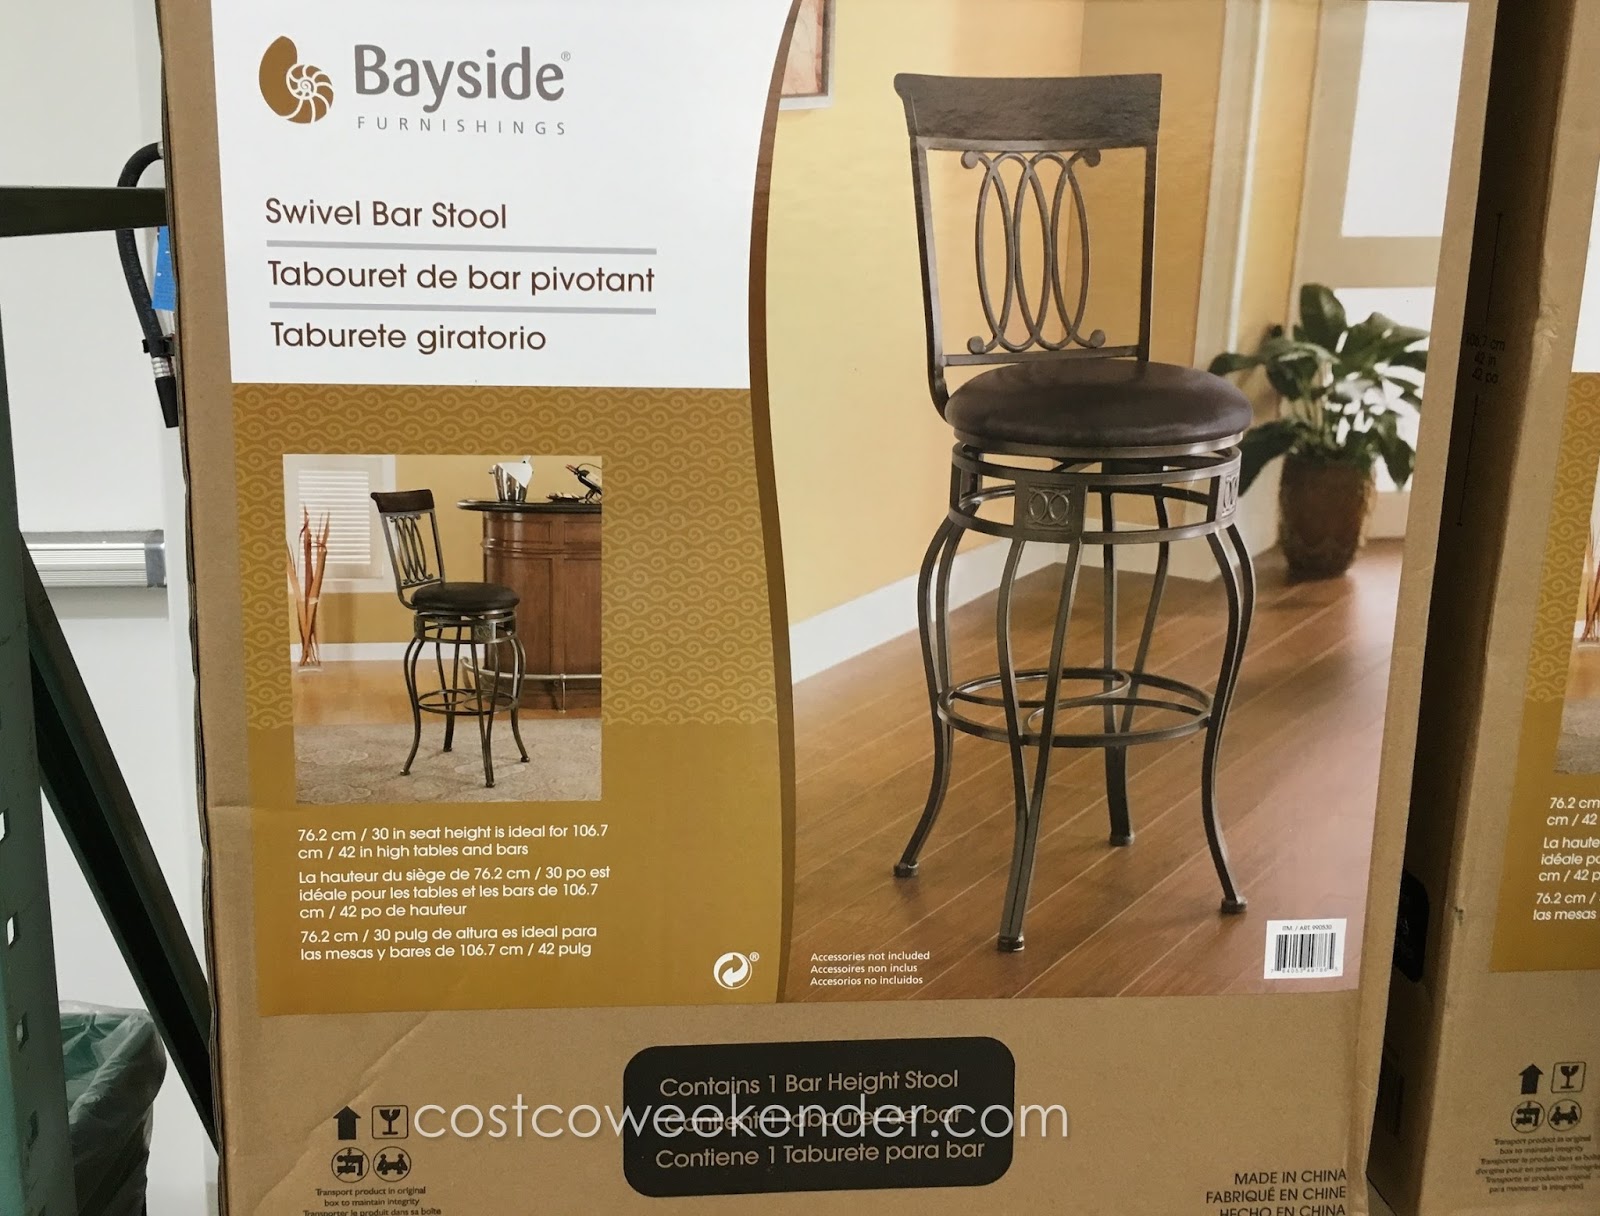 bayside furnishings swivel bar stool  costco weekender